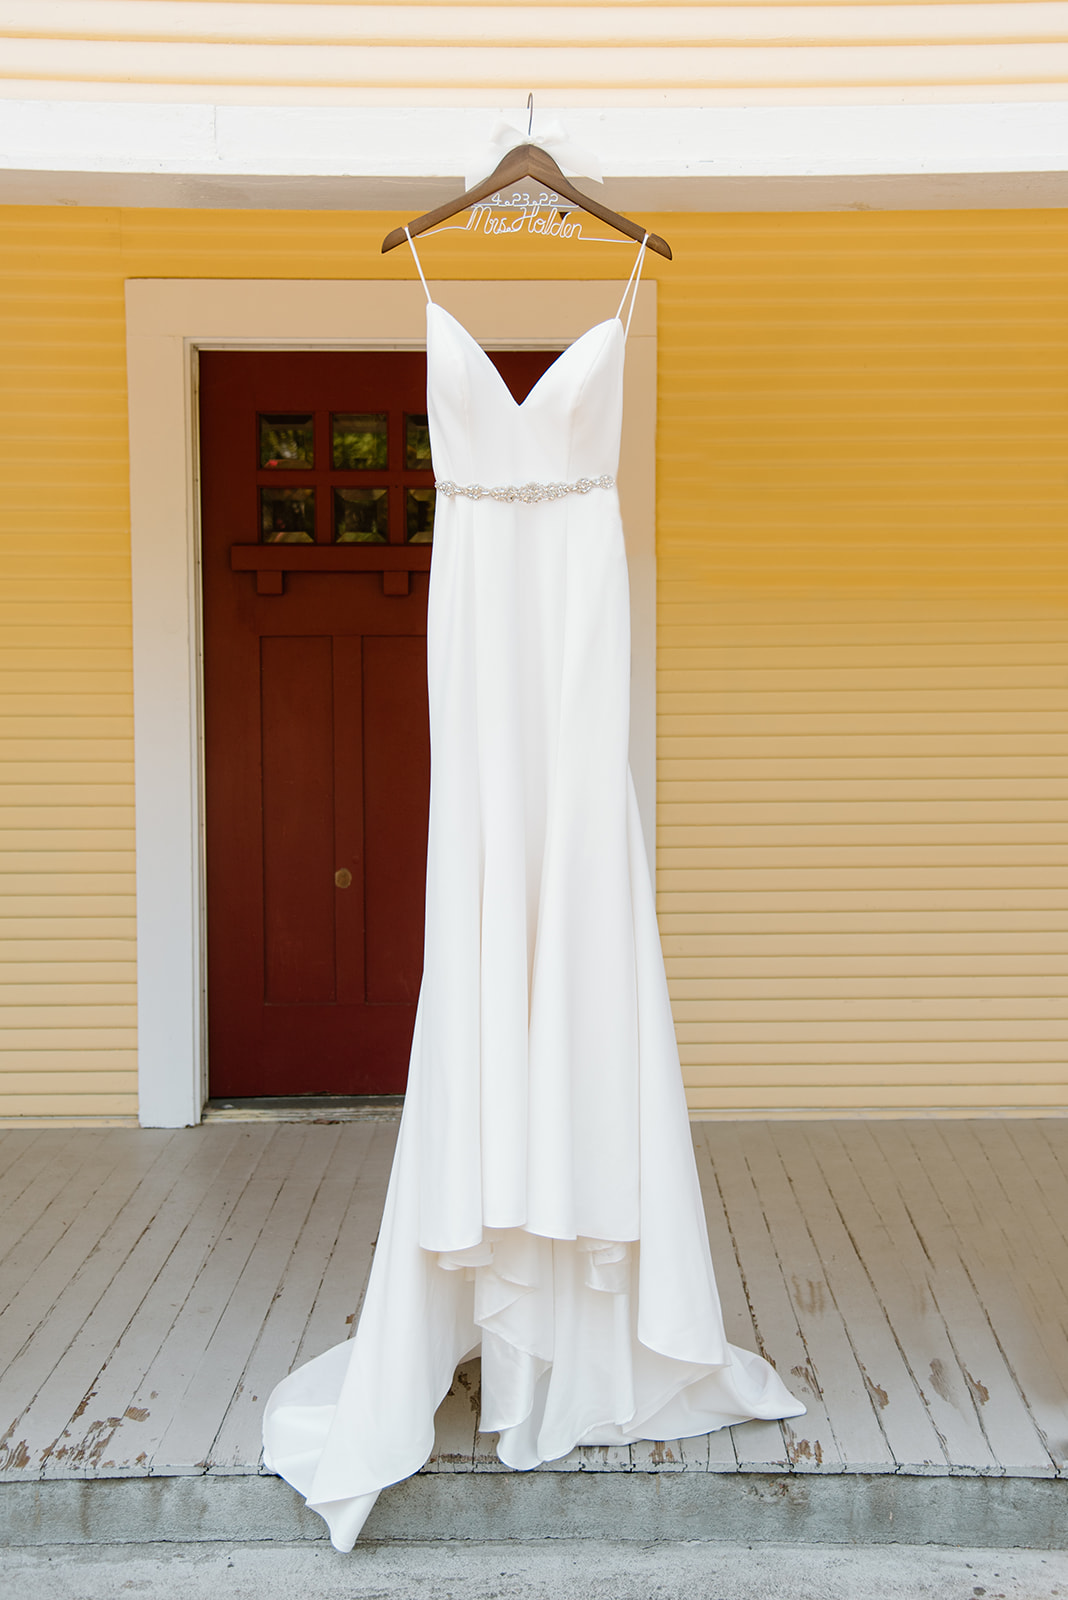 Sydney Jai Photography - Sonoma County wedding photography, wedding gown photo